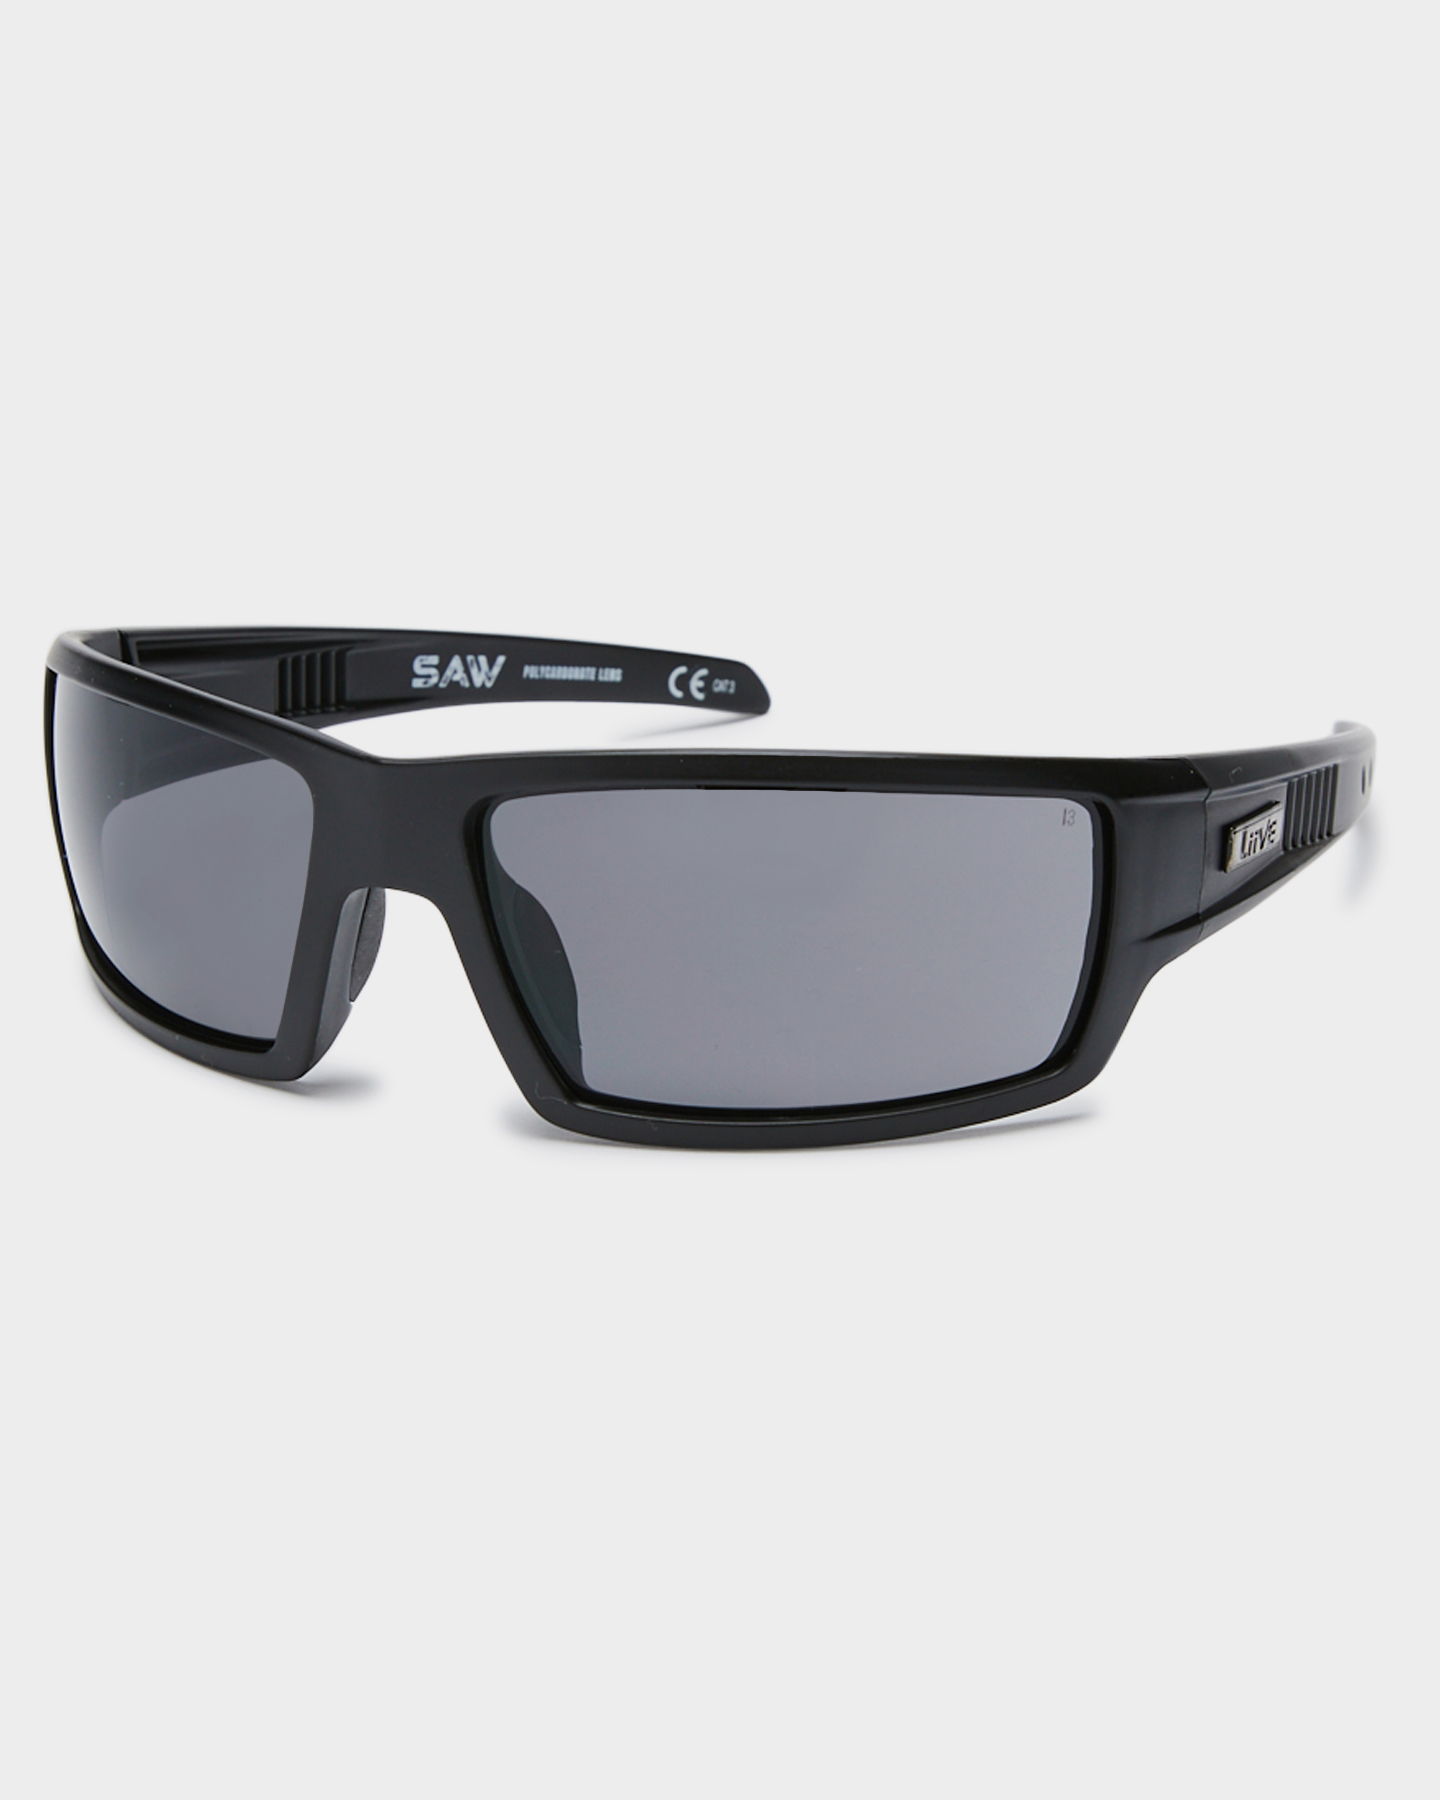 Liive Vision Saw Safety Sunglasses - Matt Black